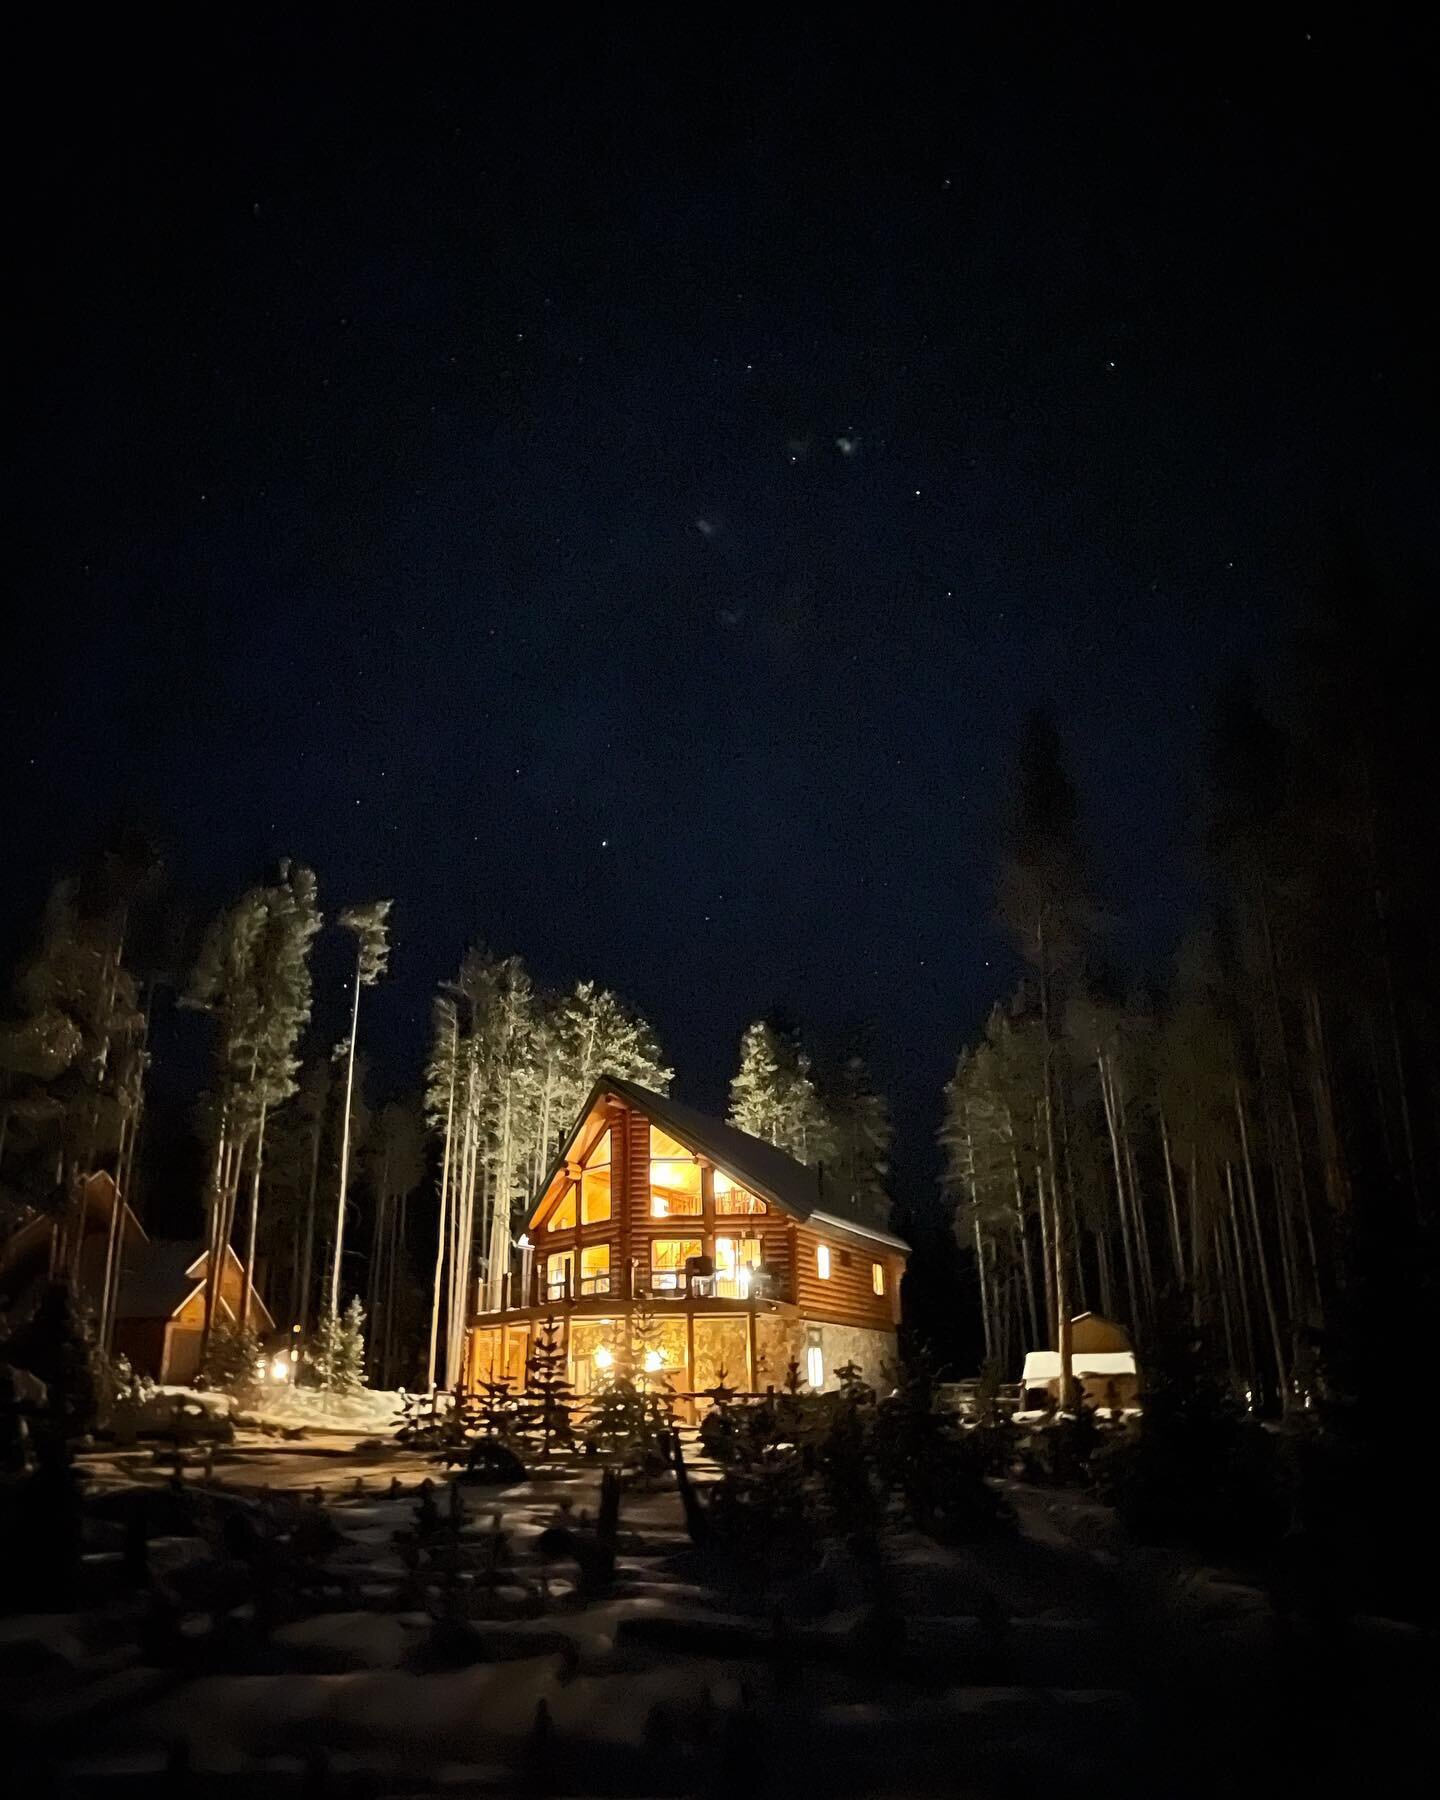 Toasty little cabin.

#cabinlife #stars #stargazing